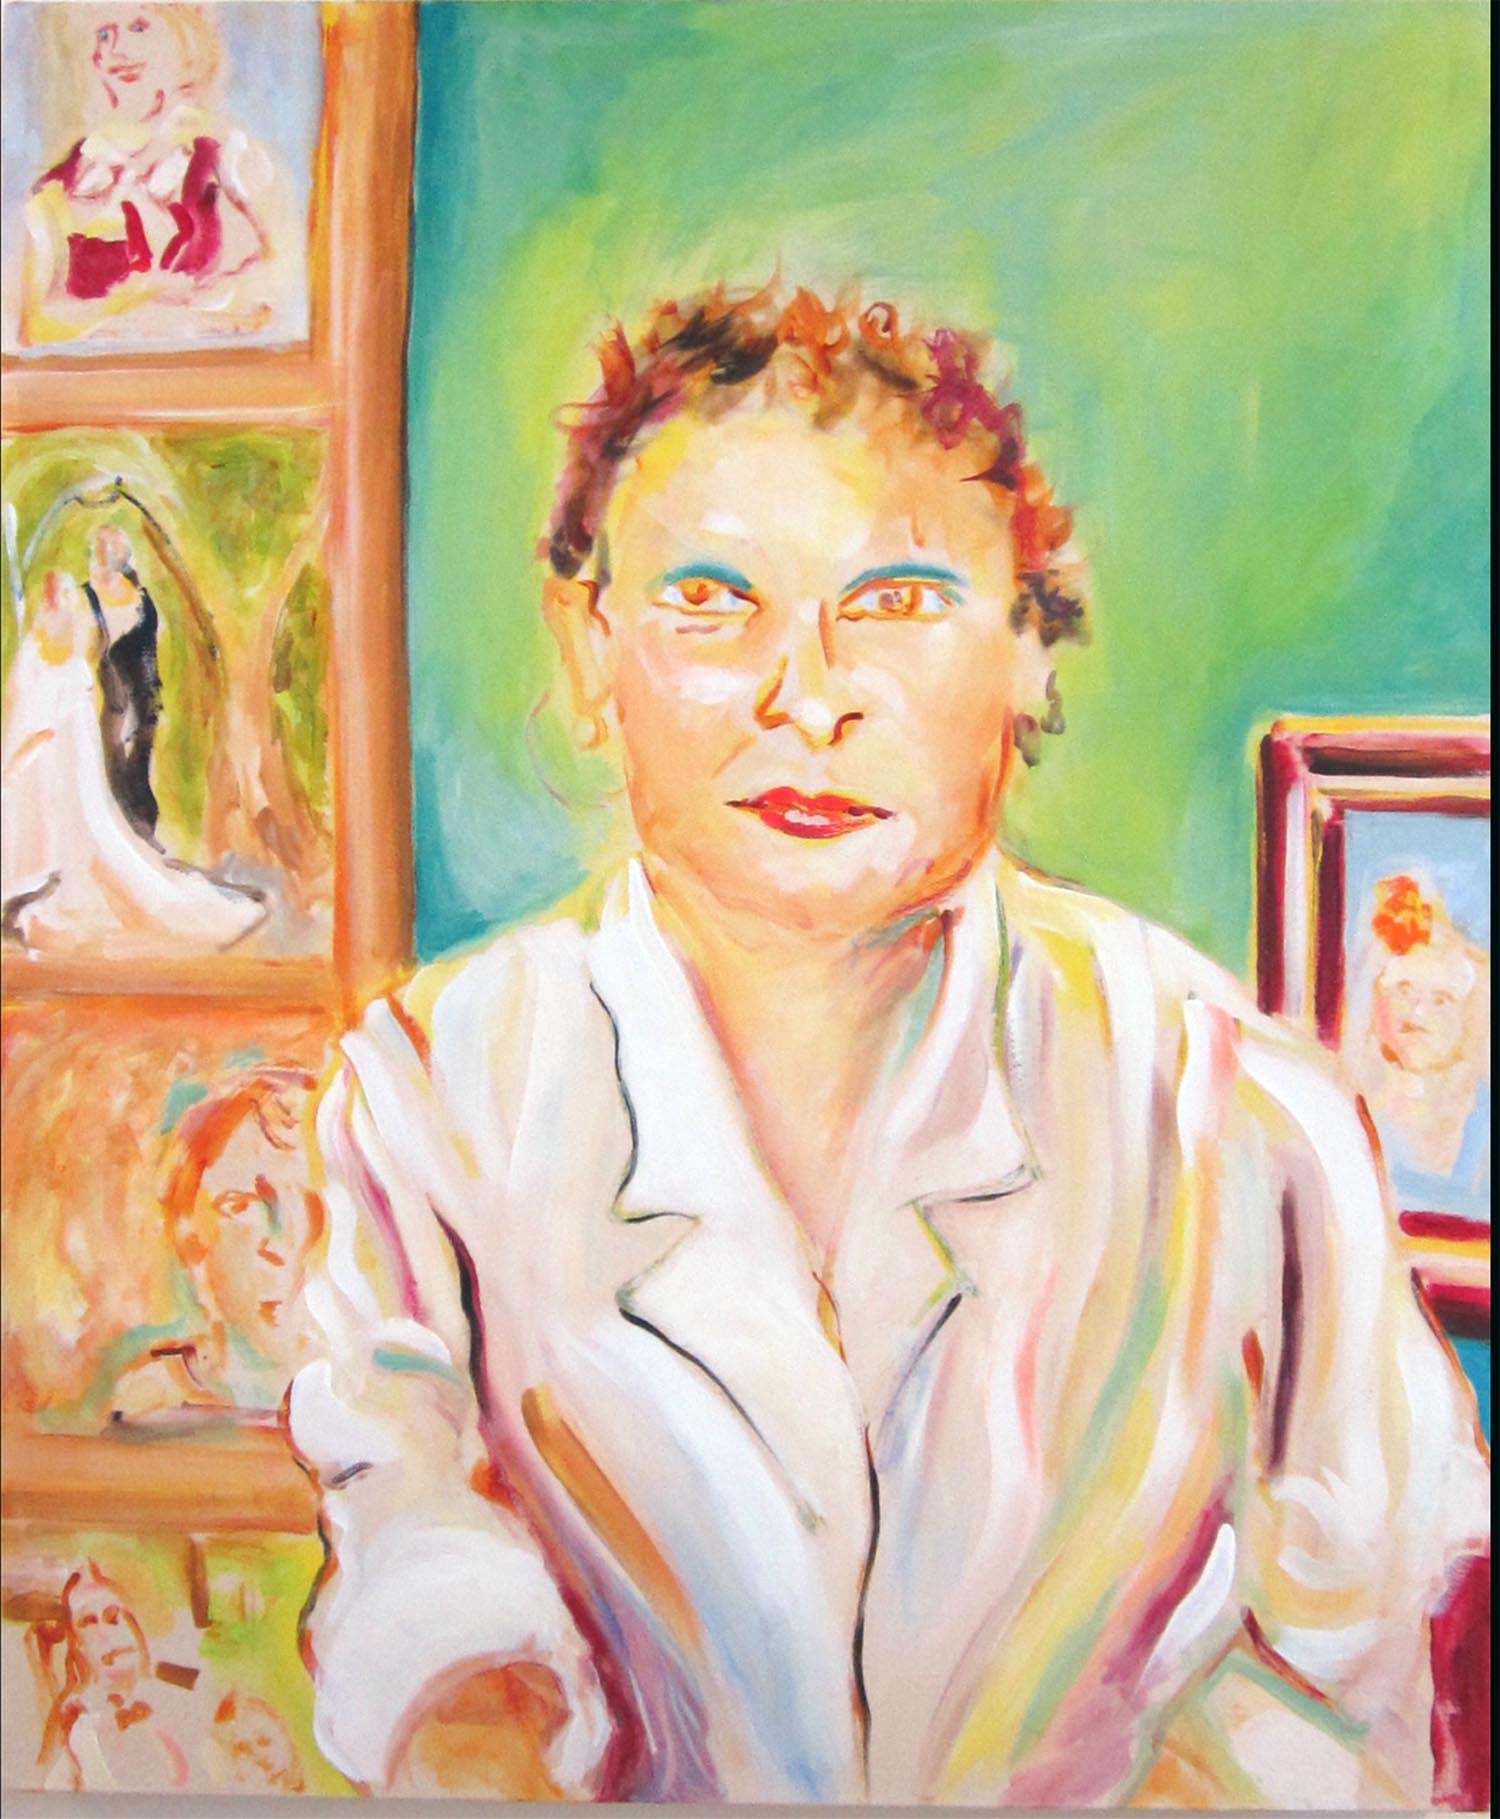 Portrait of Ana, acrylic on canvas, 48" x 40" 2014